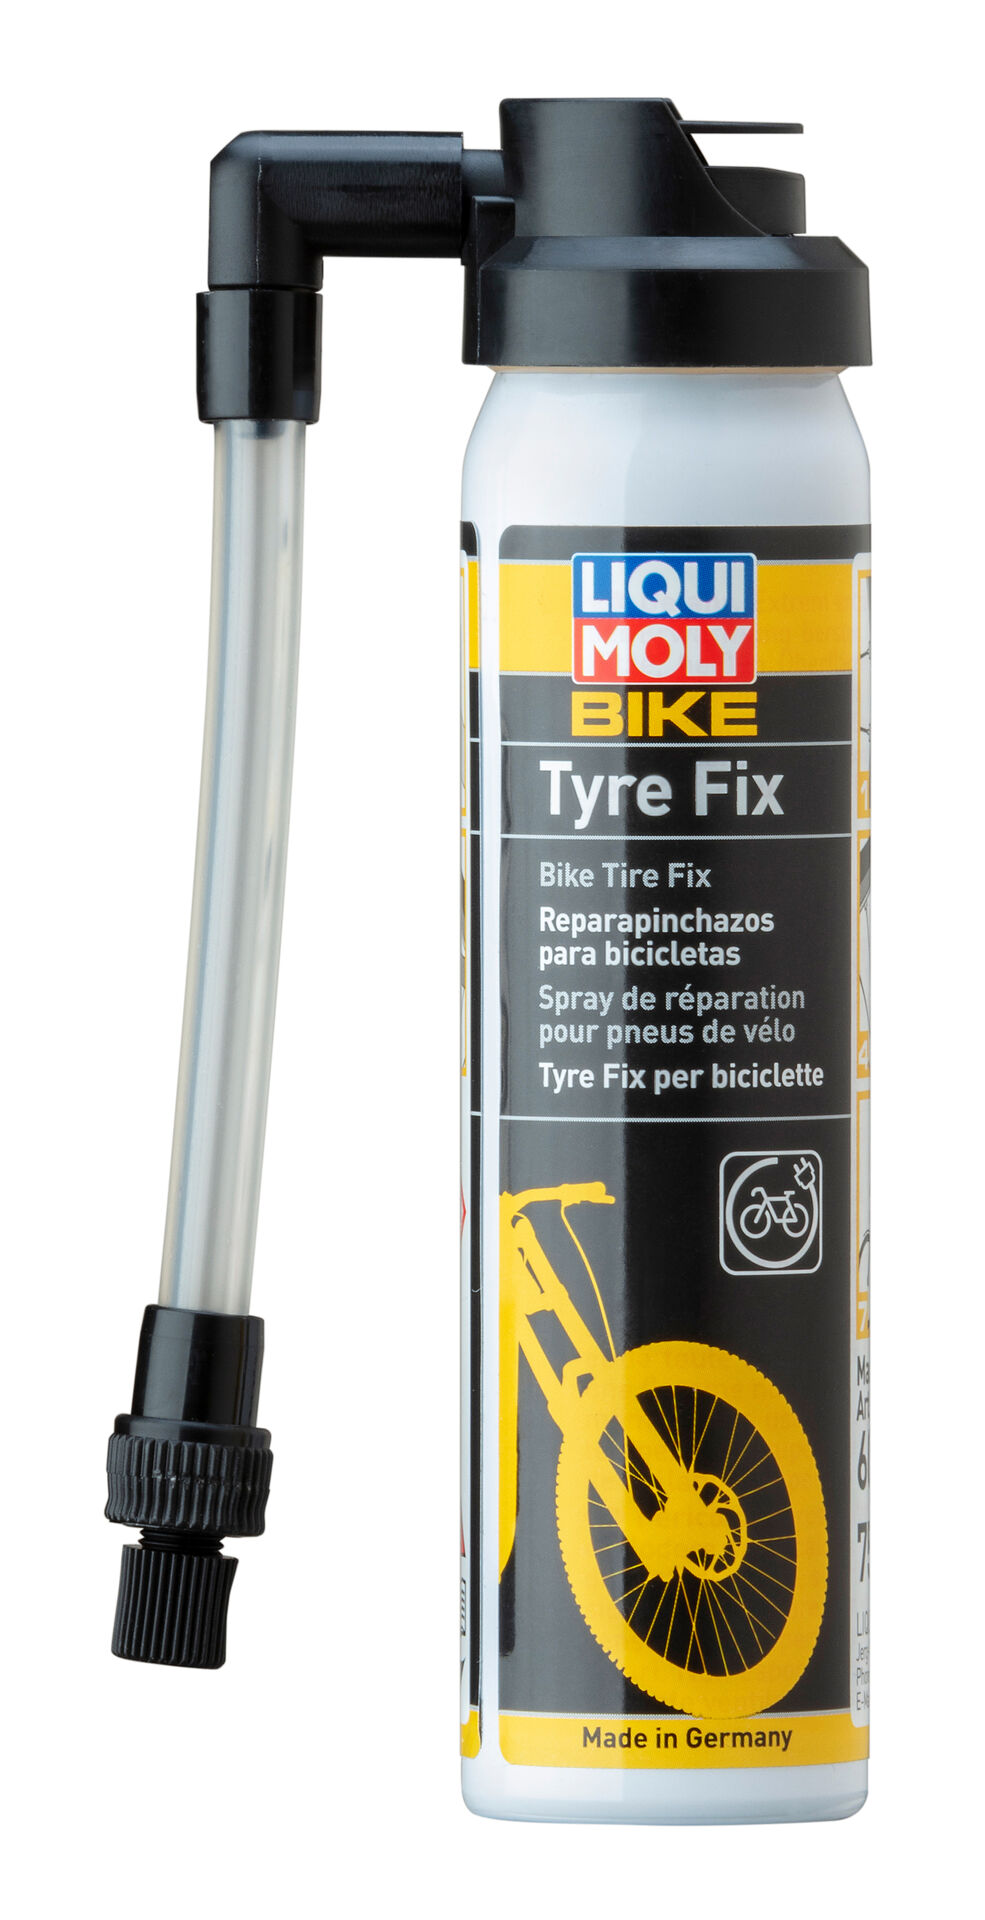 Liqui Moly Bike Tyre Fix Fahrrad E-Bike Reifen Pannen Hilfe Reparatur 75 ml